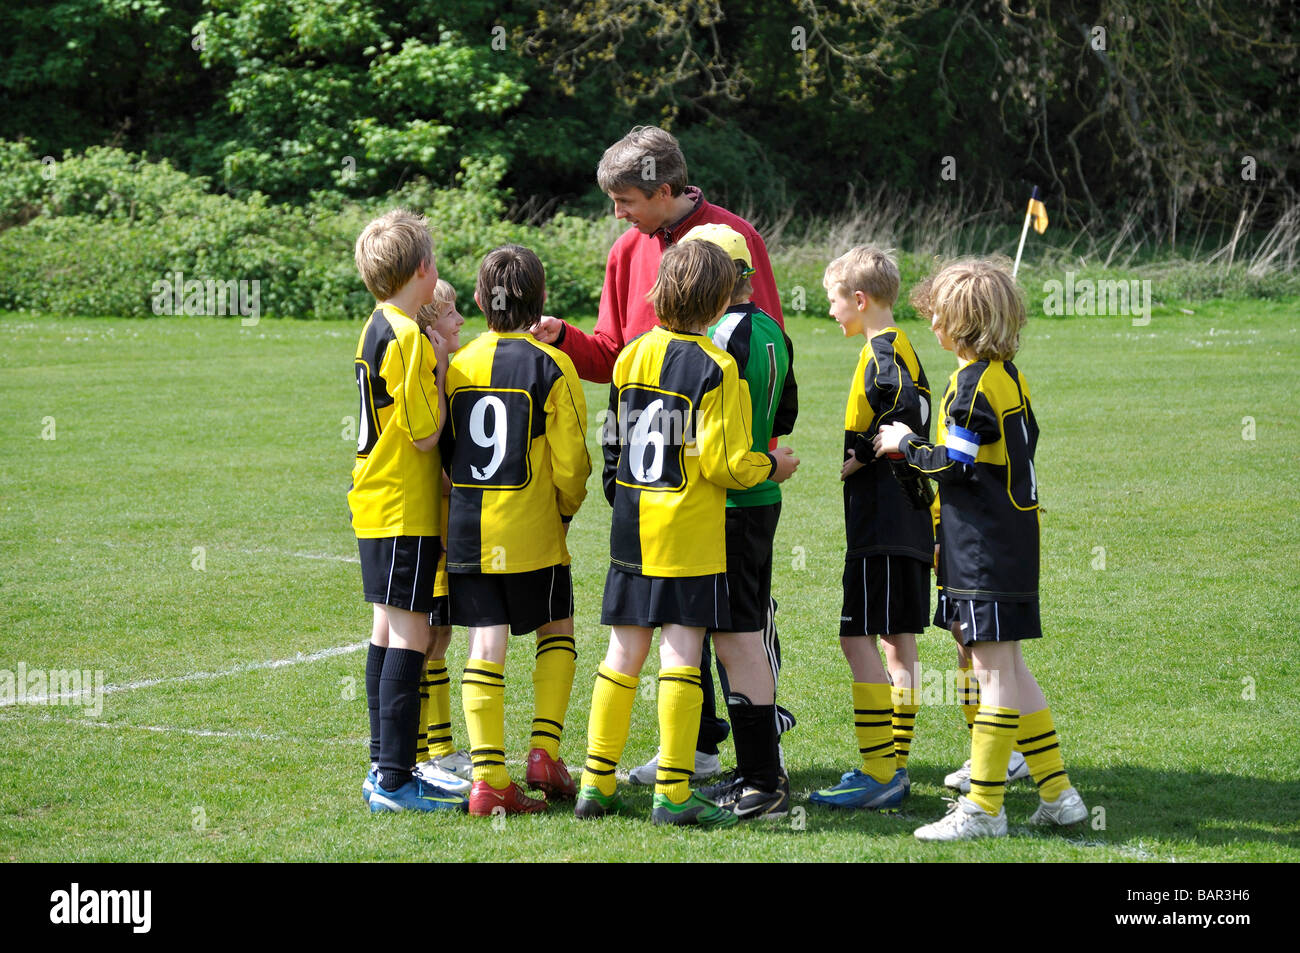 Match de football du garçon, Bury St Edmunds, Suffolk, Angleterre, Royaume-Uni Banque D'Images